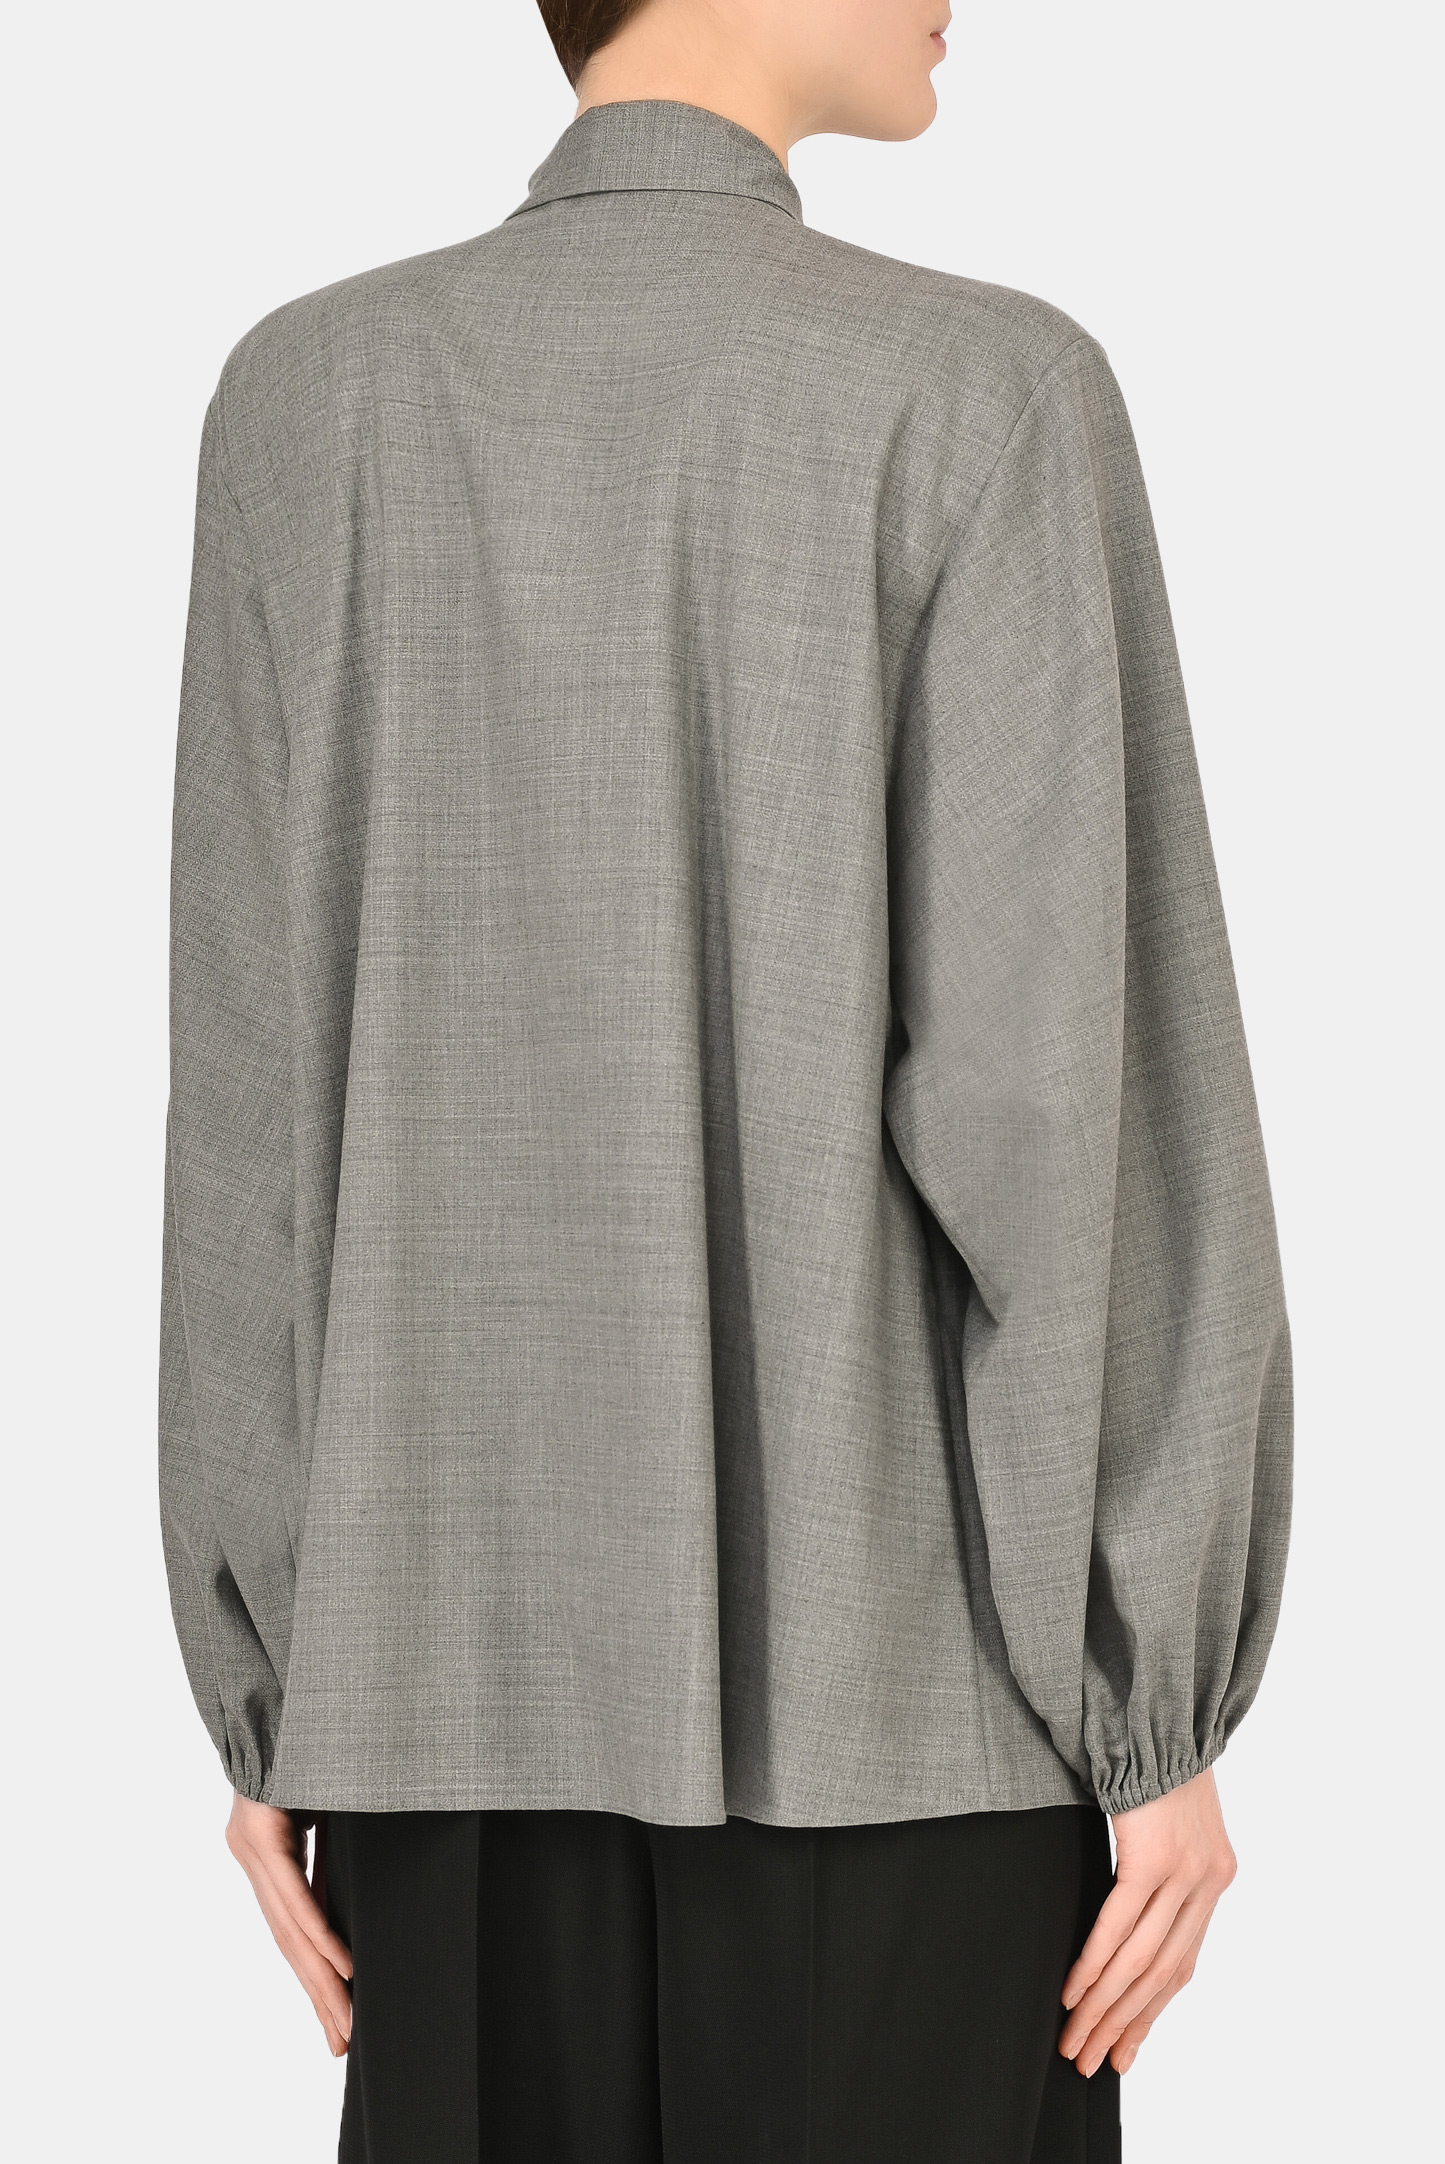 Блуза ALEXANDRE VAUTHIER 213SH1504, цвет: Серый, Женский